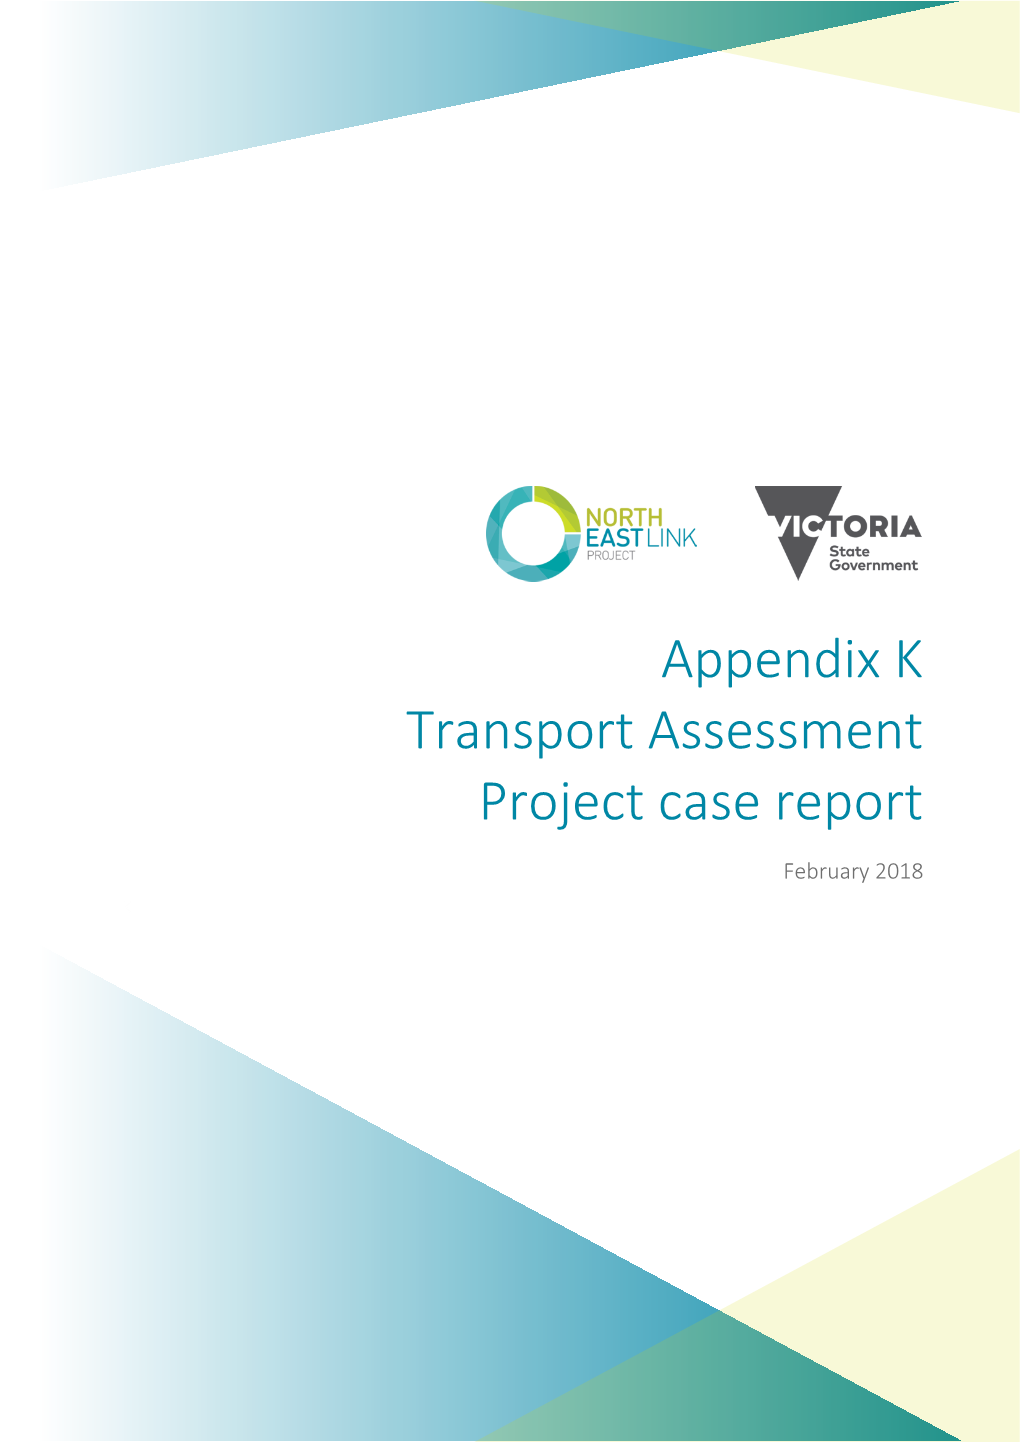 Appendix K Transport Assessment Project Case Report